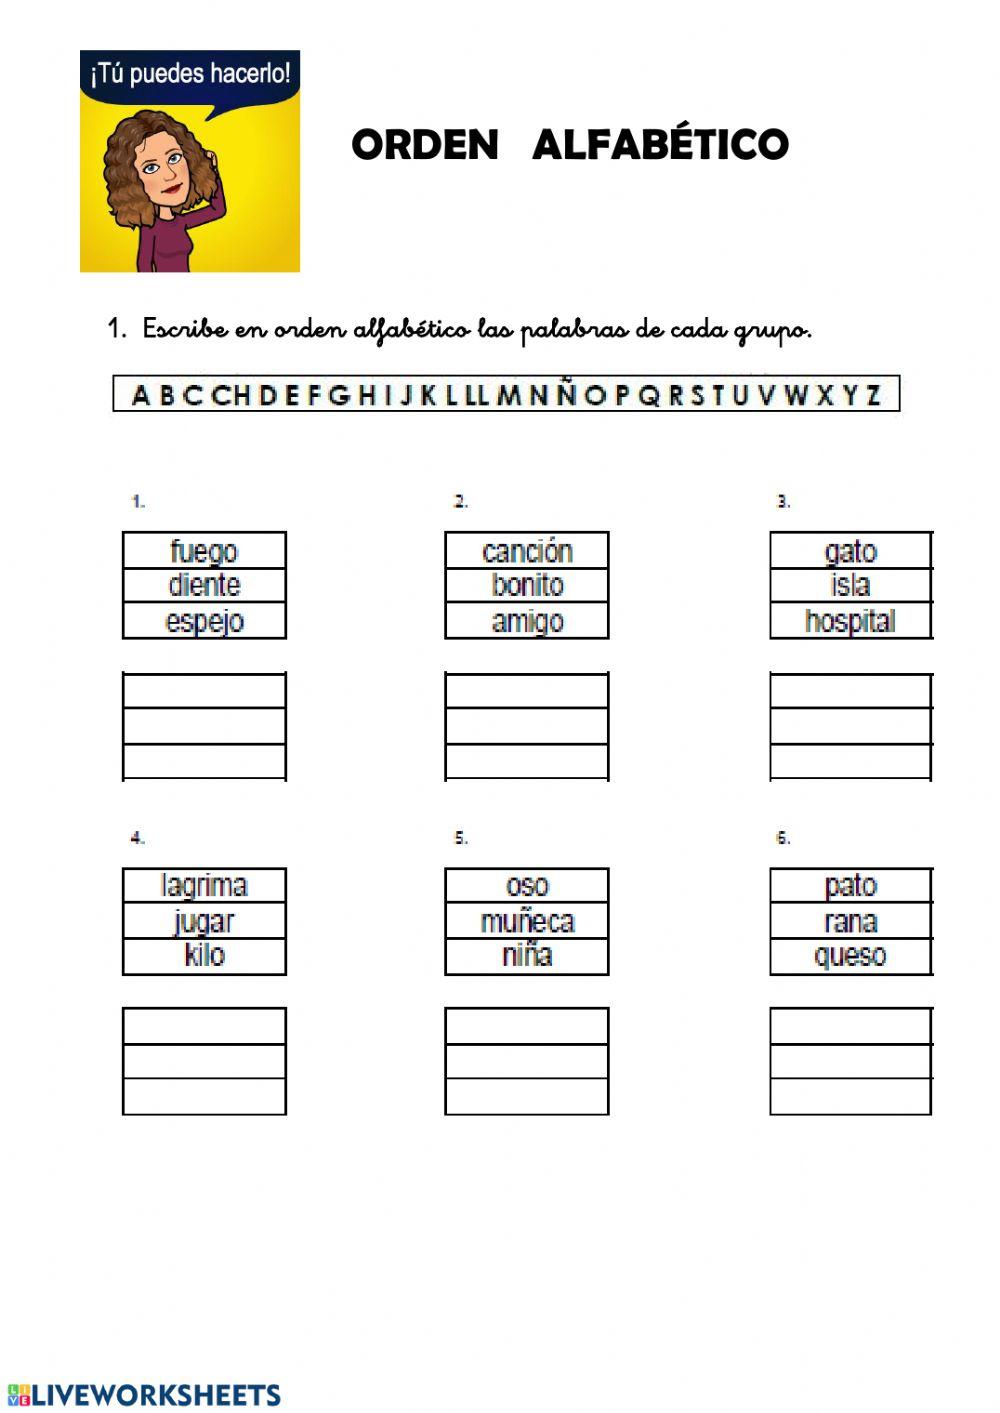 Orden alfabético activity | Live Worksheets